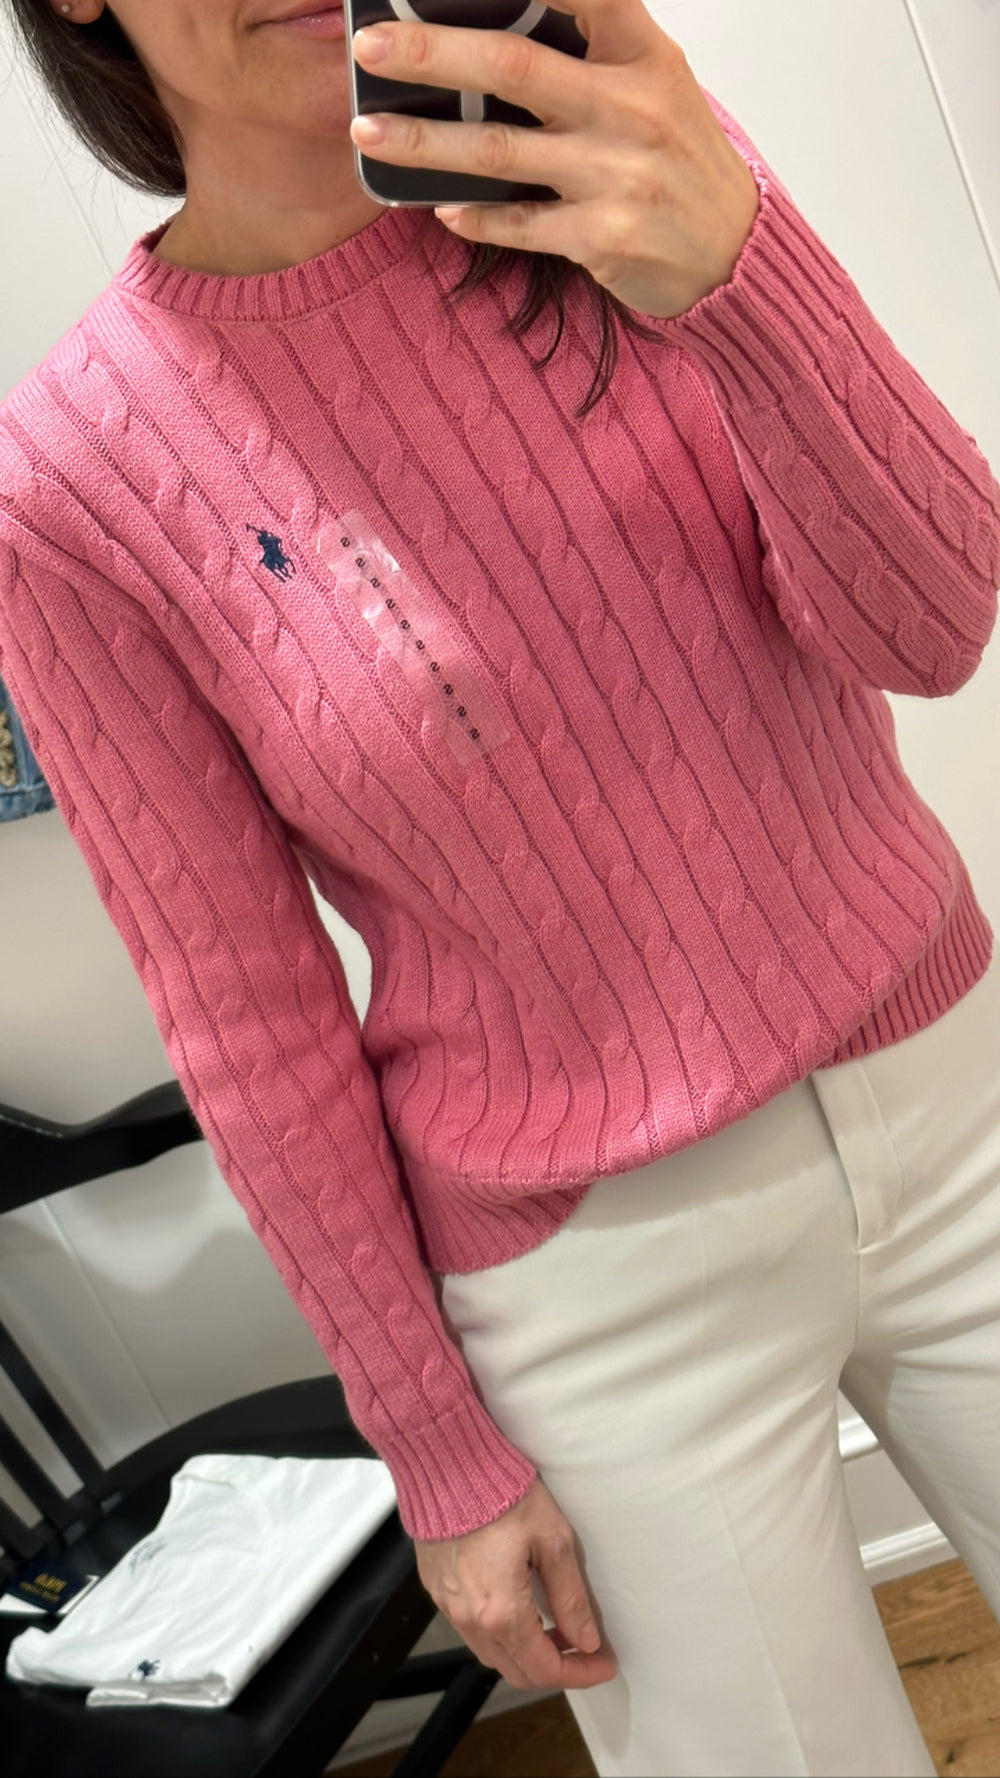 Ralph Lauren NYC Crewneck Sweater - ShopStyle